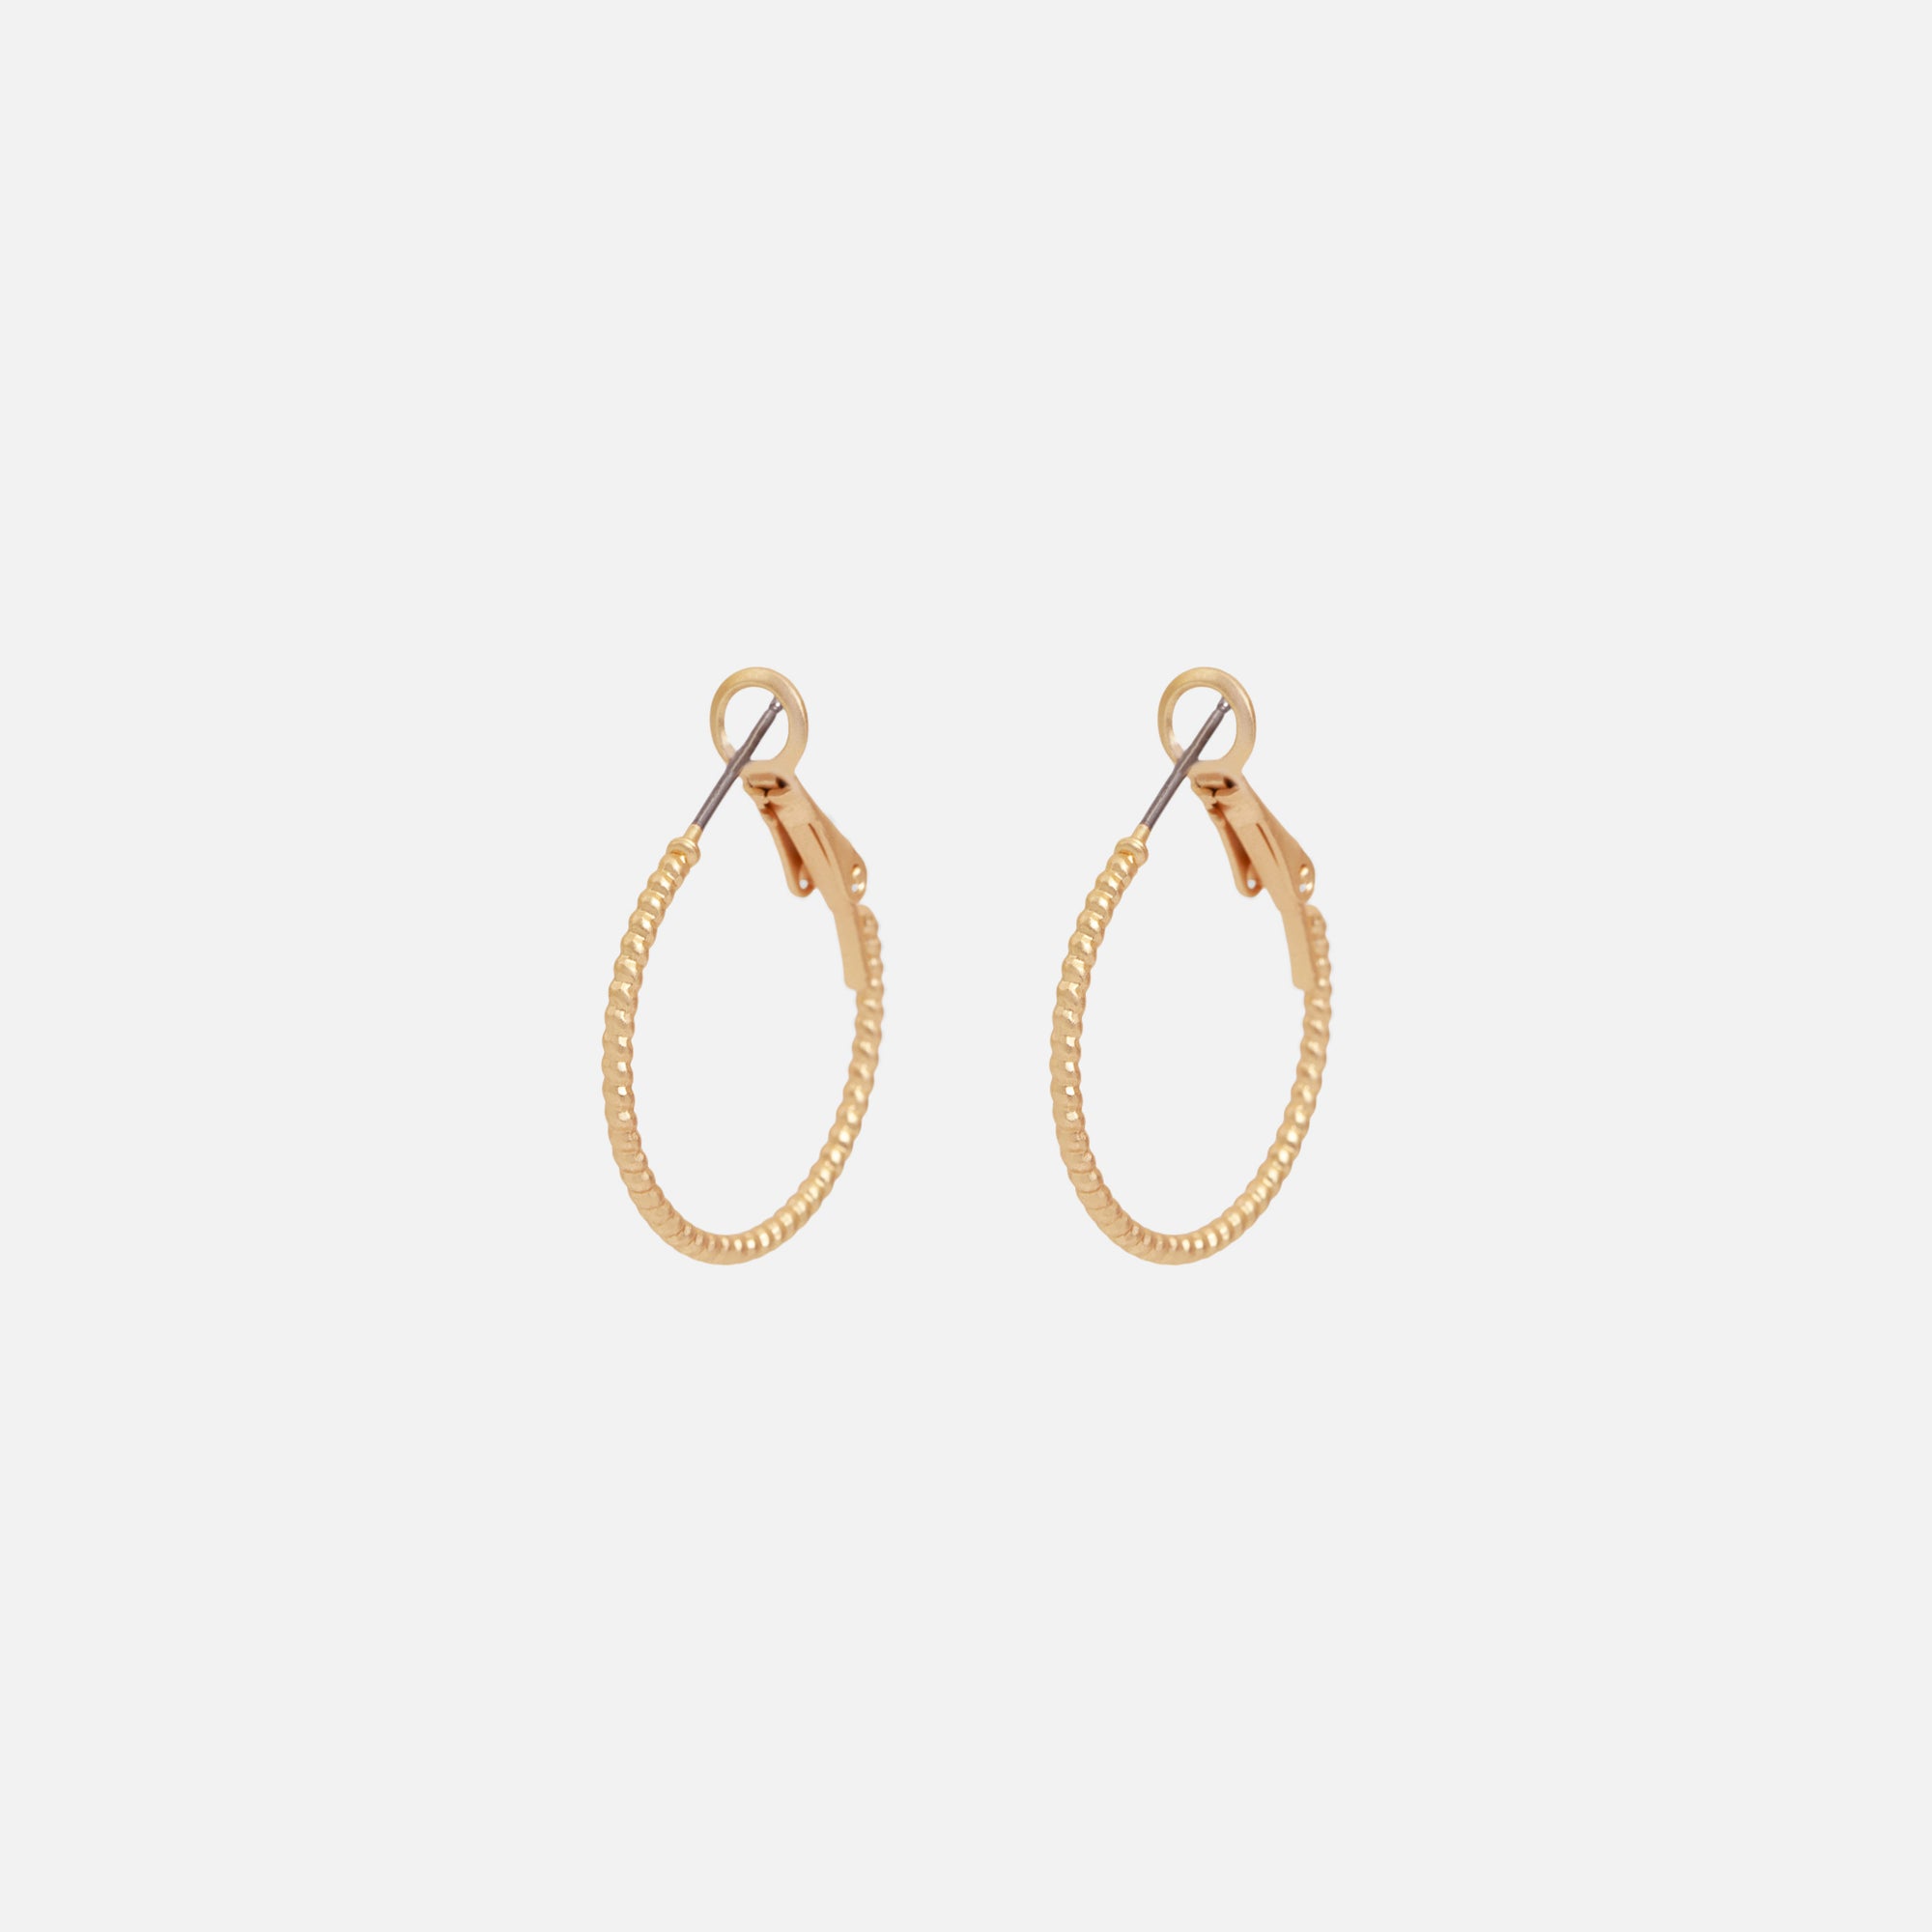 Duo of golden hoop earrings and mother-of-pearl pendant earrings